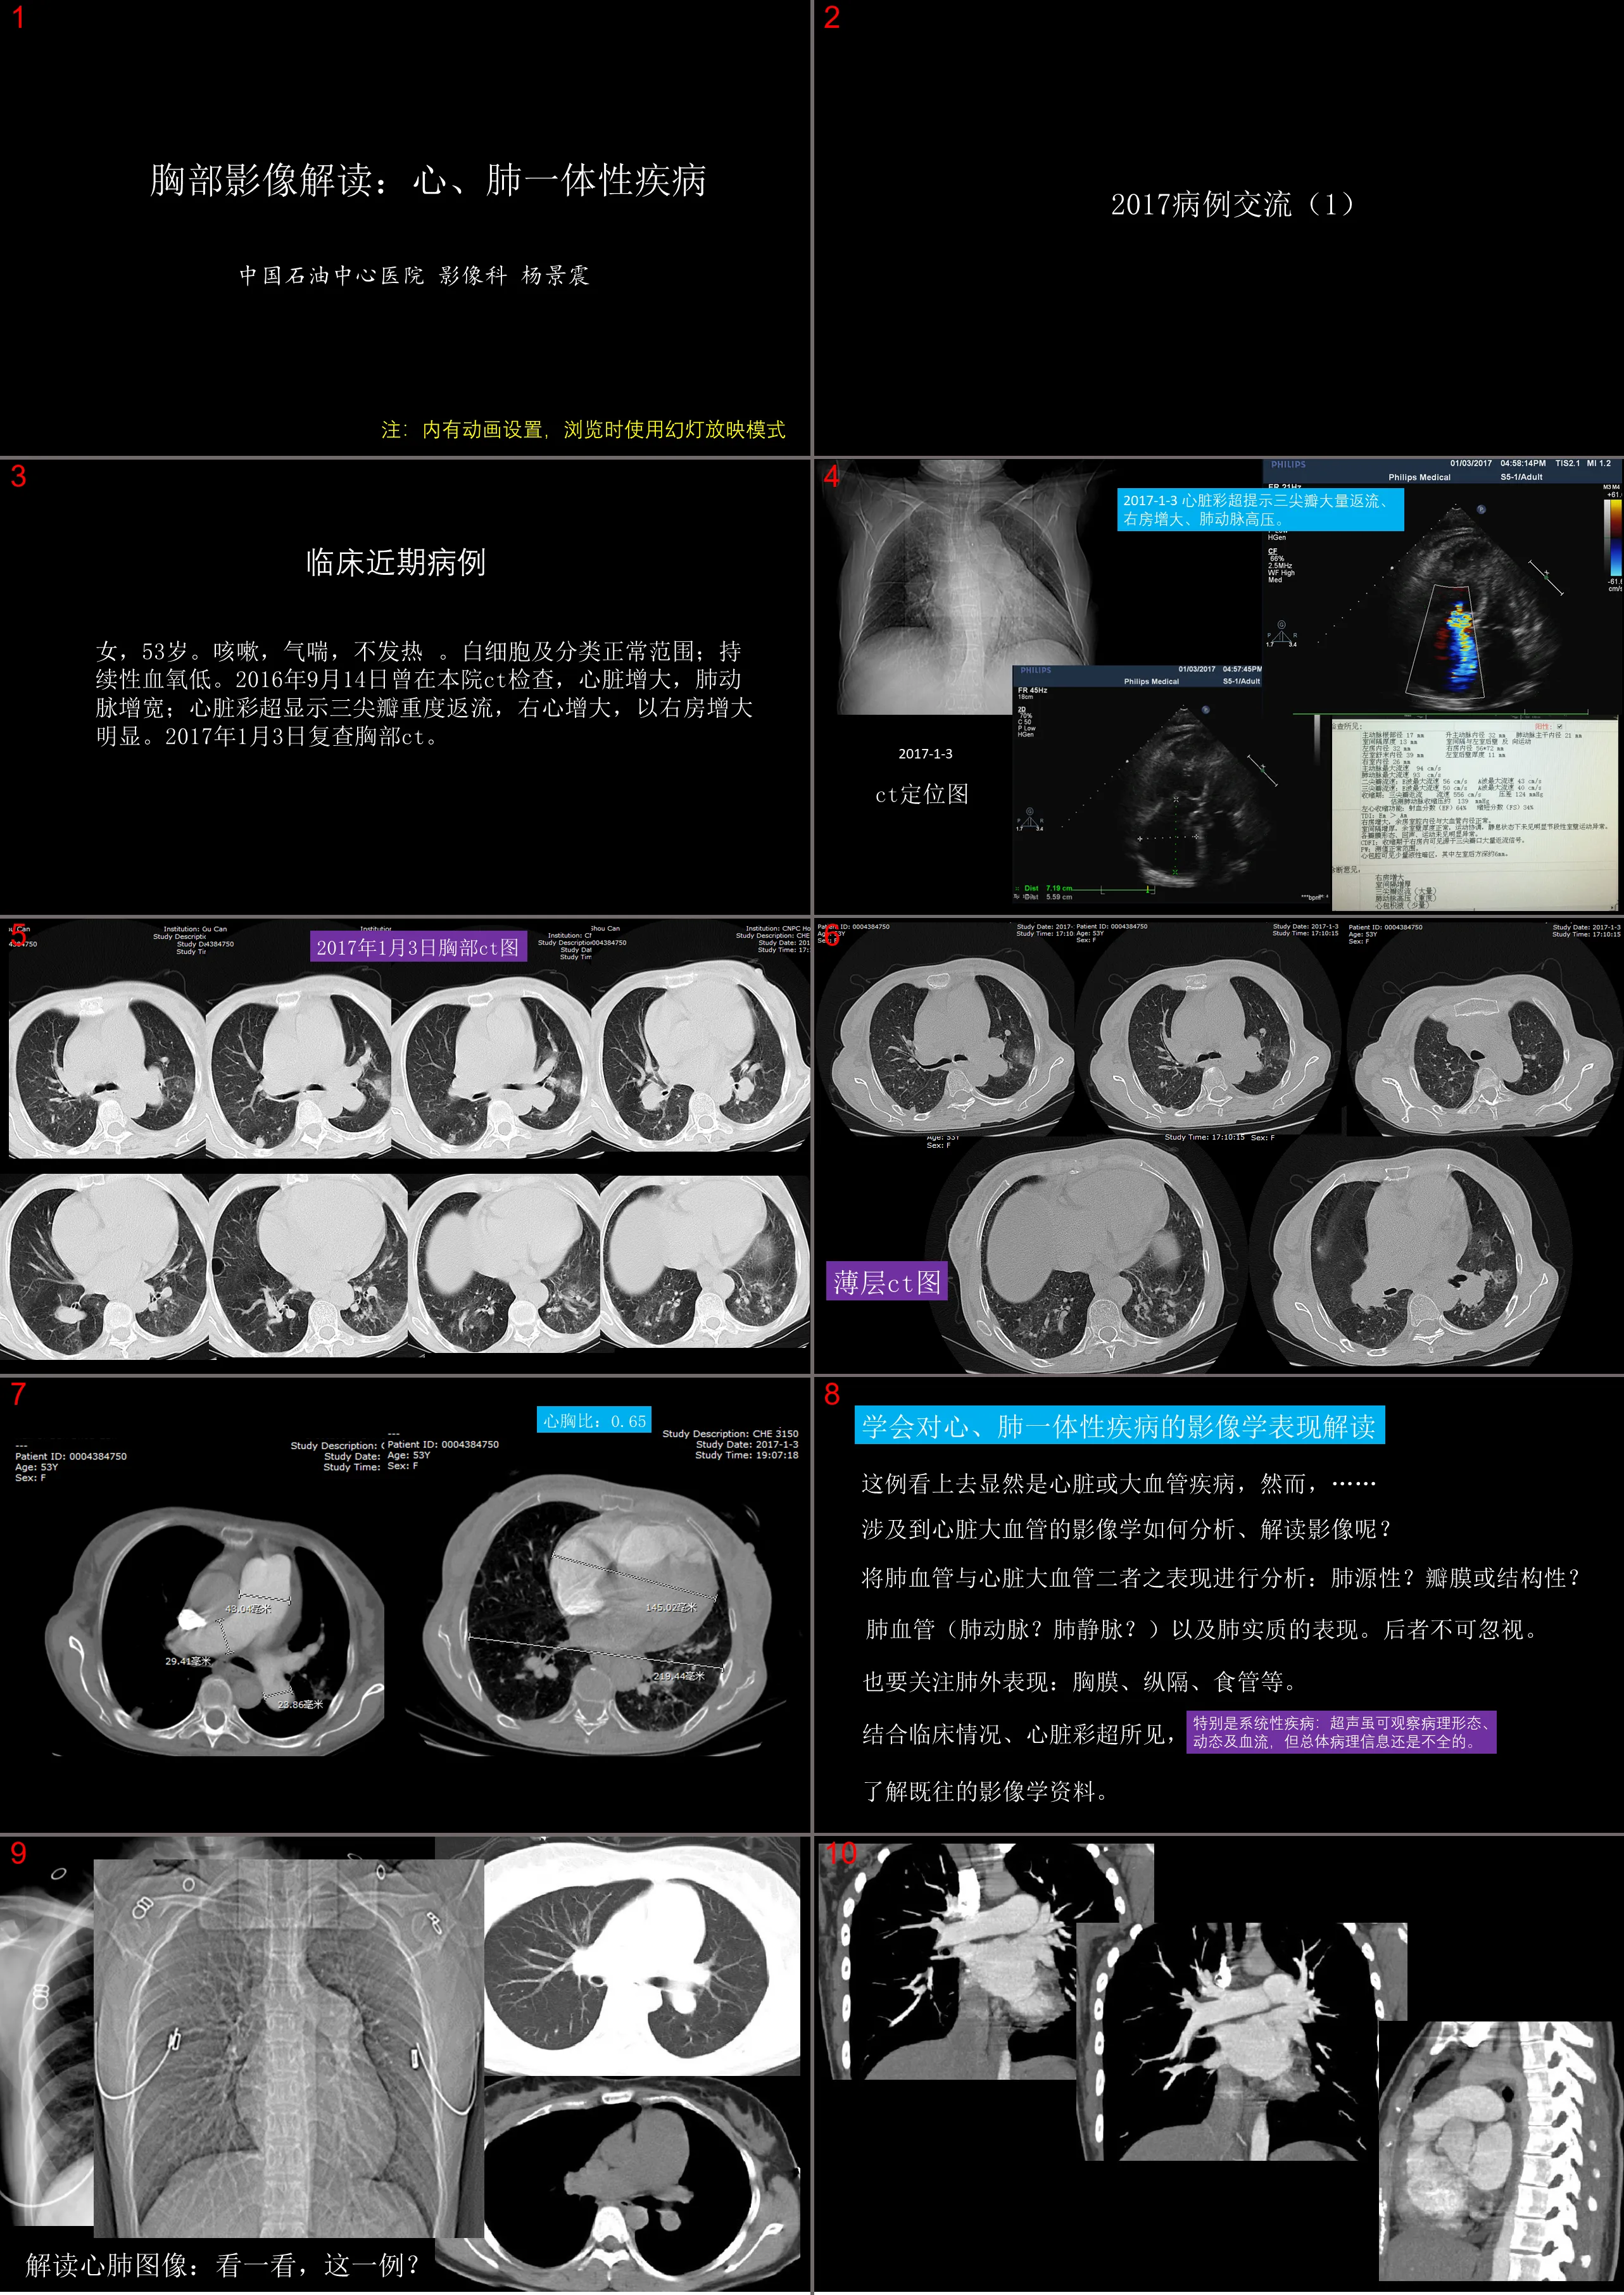 Interpretation of chest images: cardiopulmonary integration disease